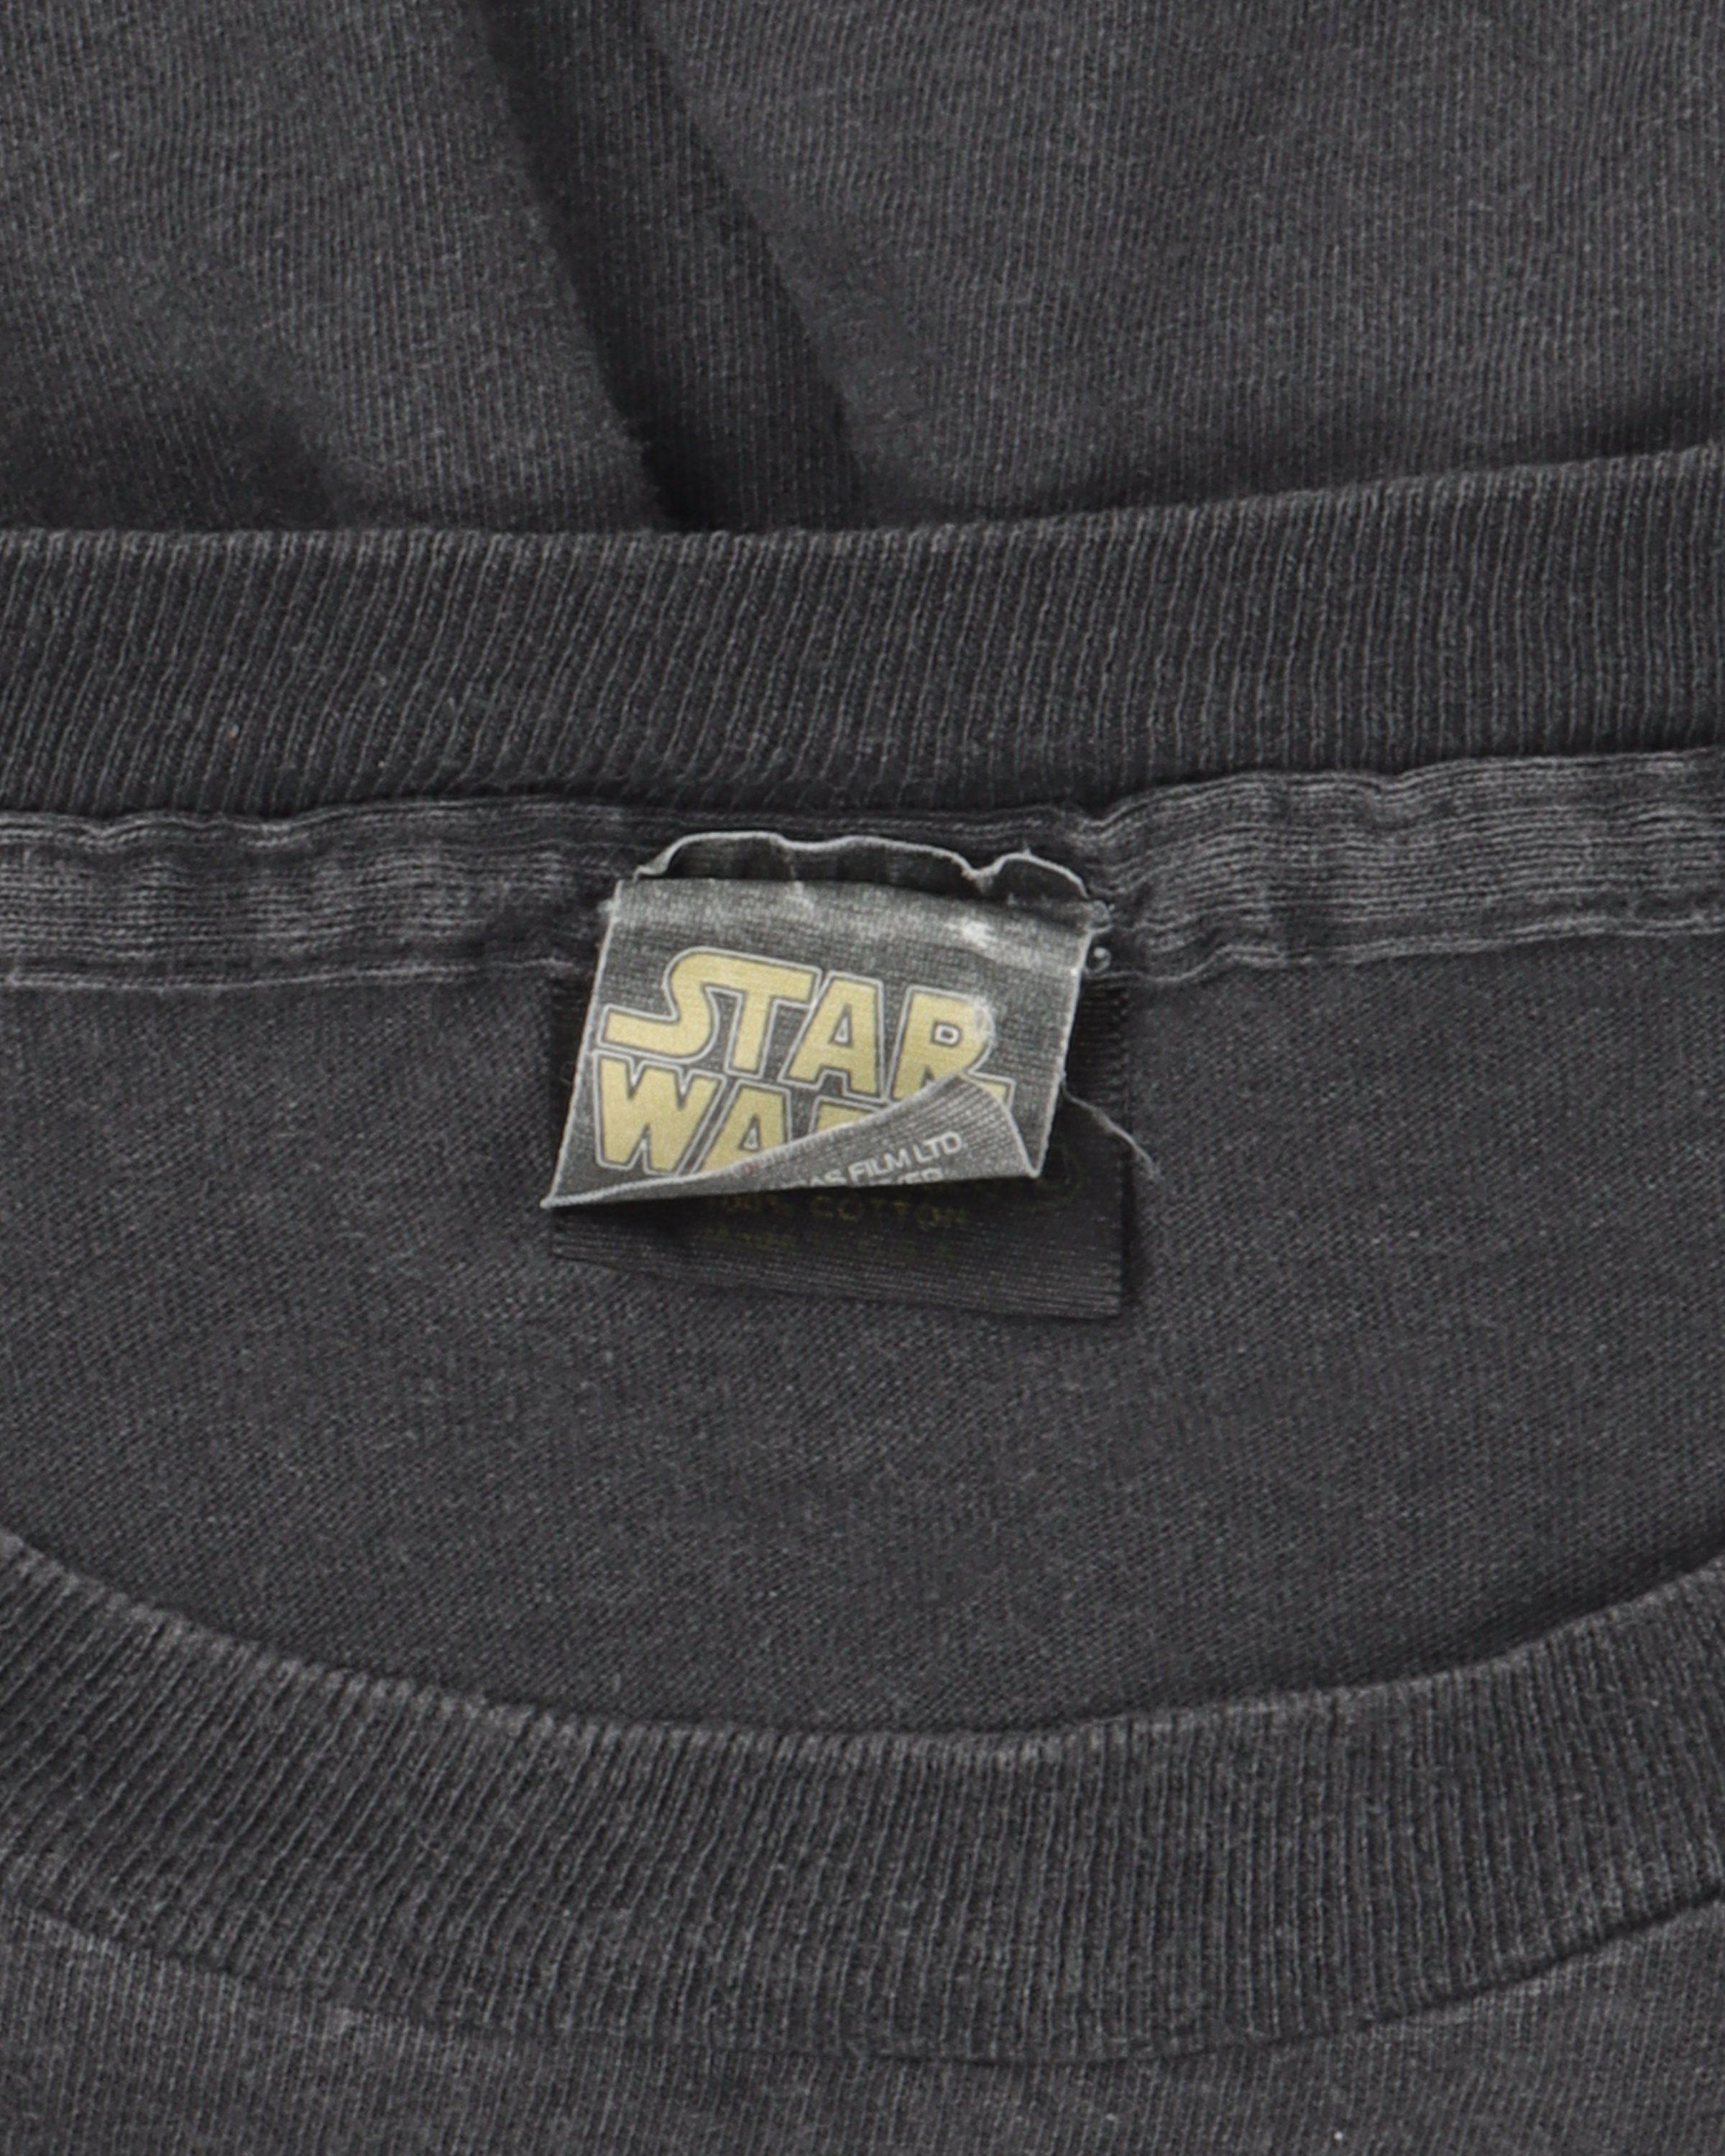 Darth Vader Star Wars T-Shirt